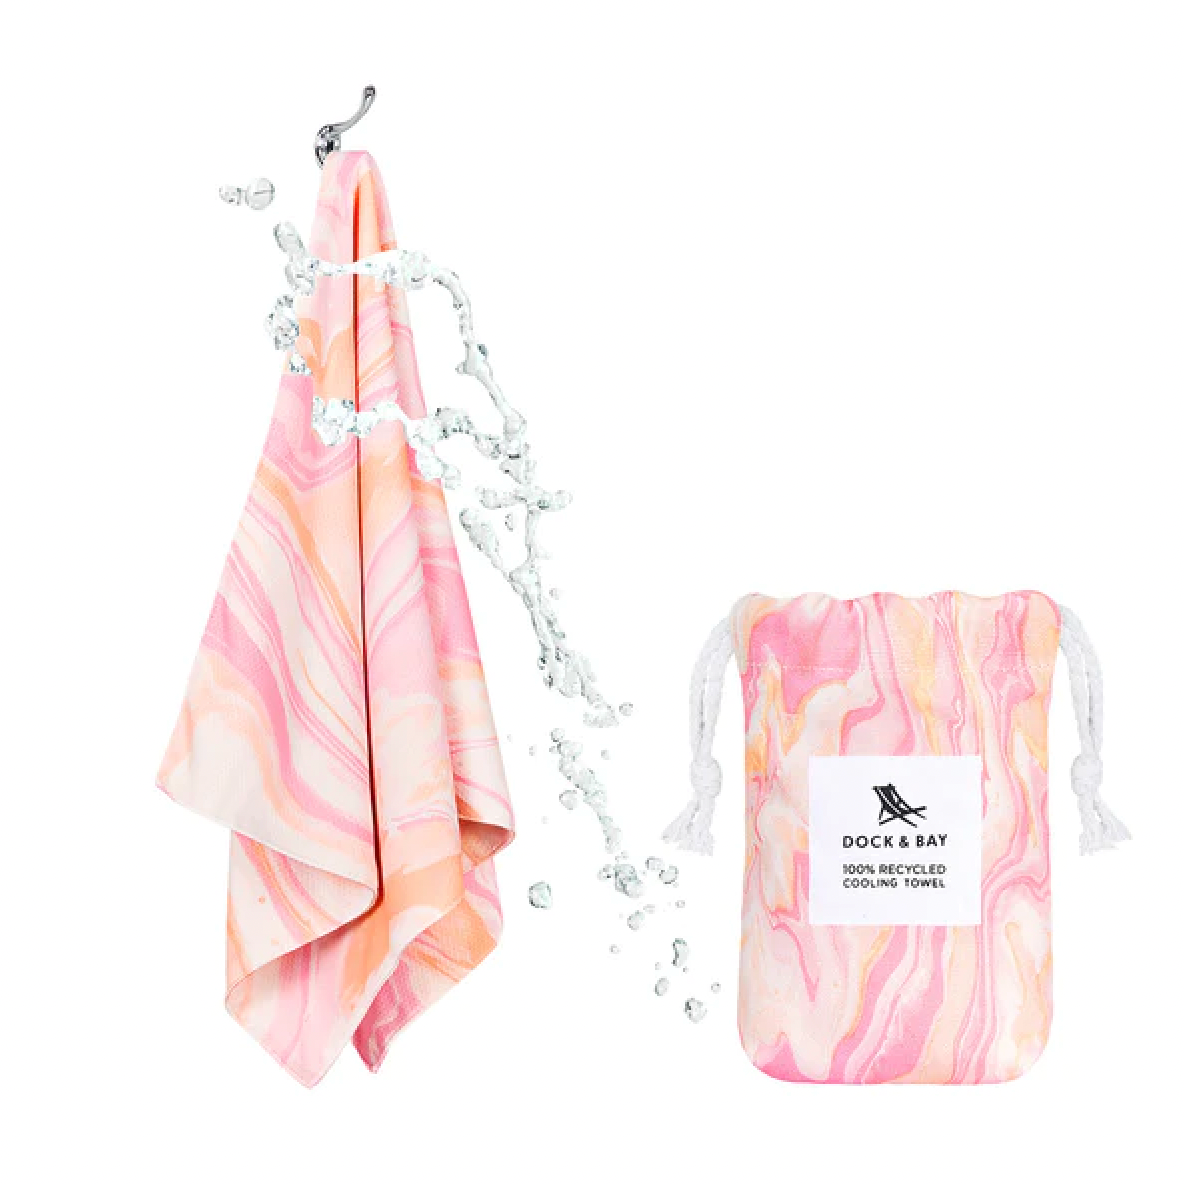 Dock & Bay Cooling Towel - Peach Melba